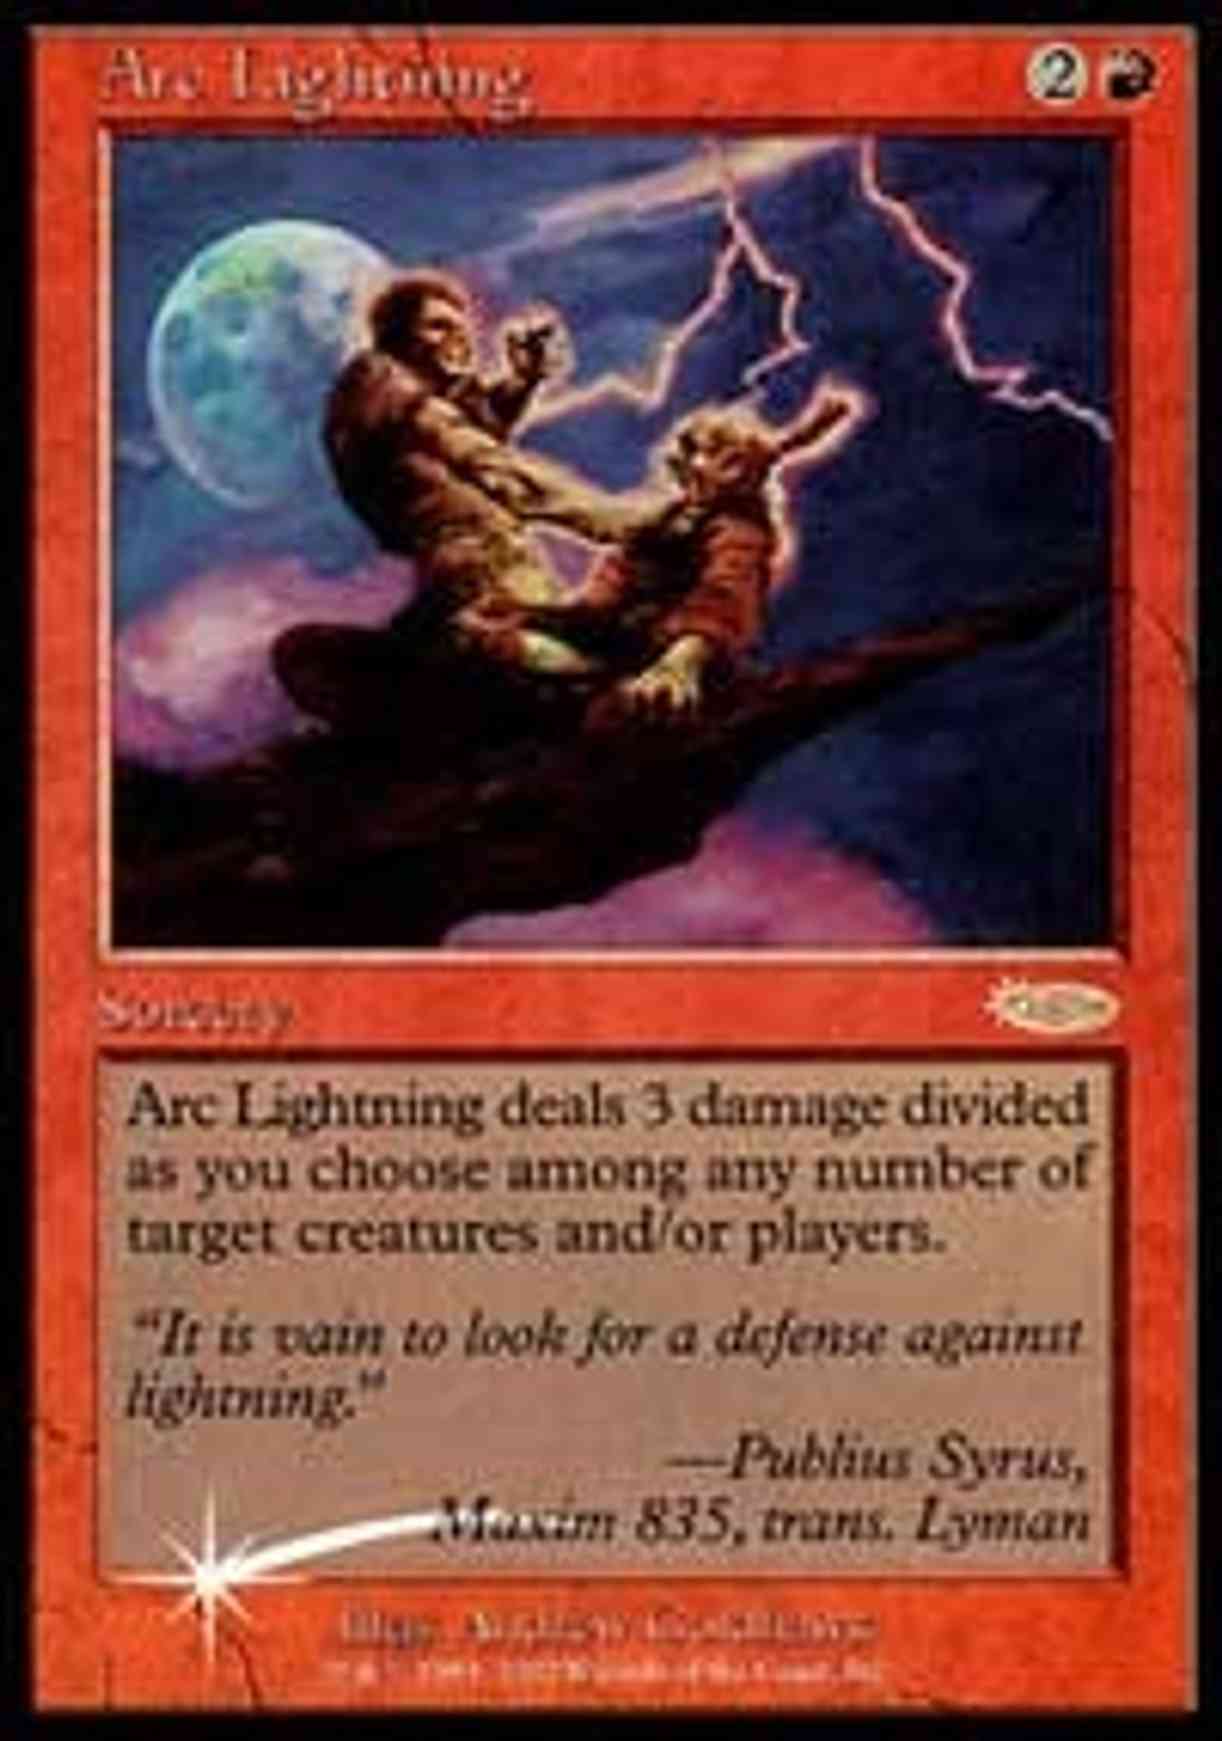 Arc Lightning magic card front